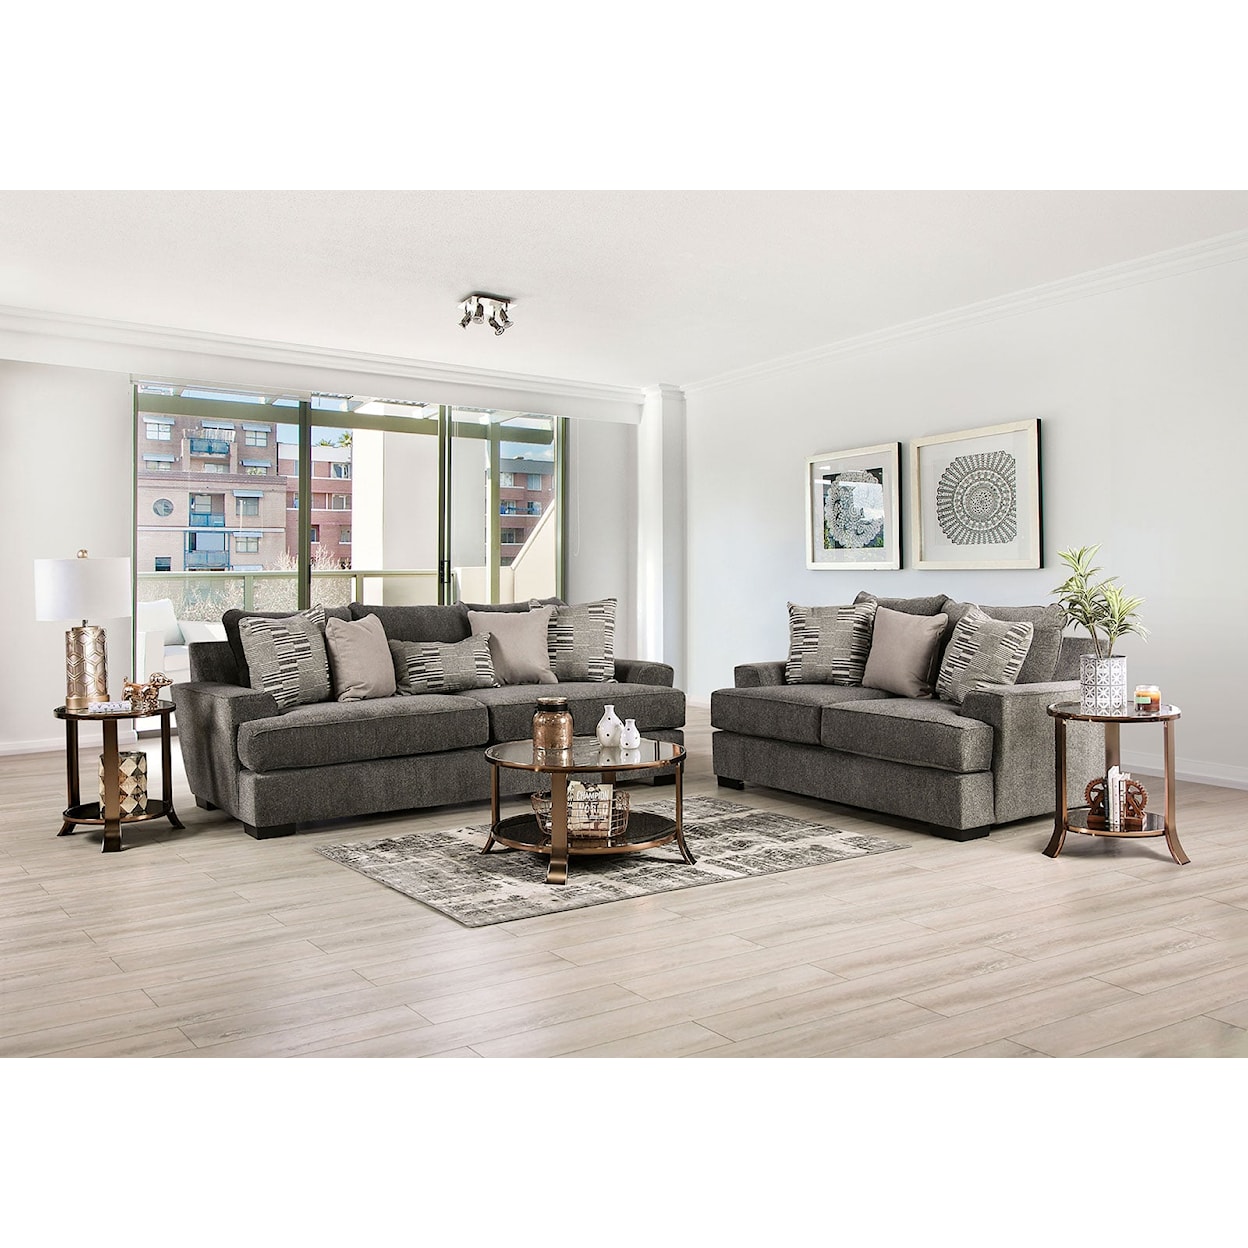 Furniture of America Holborn Sofa and Loveseat